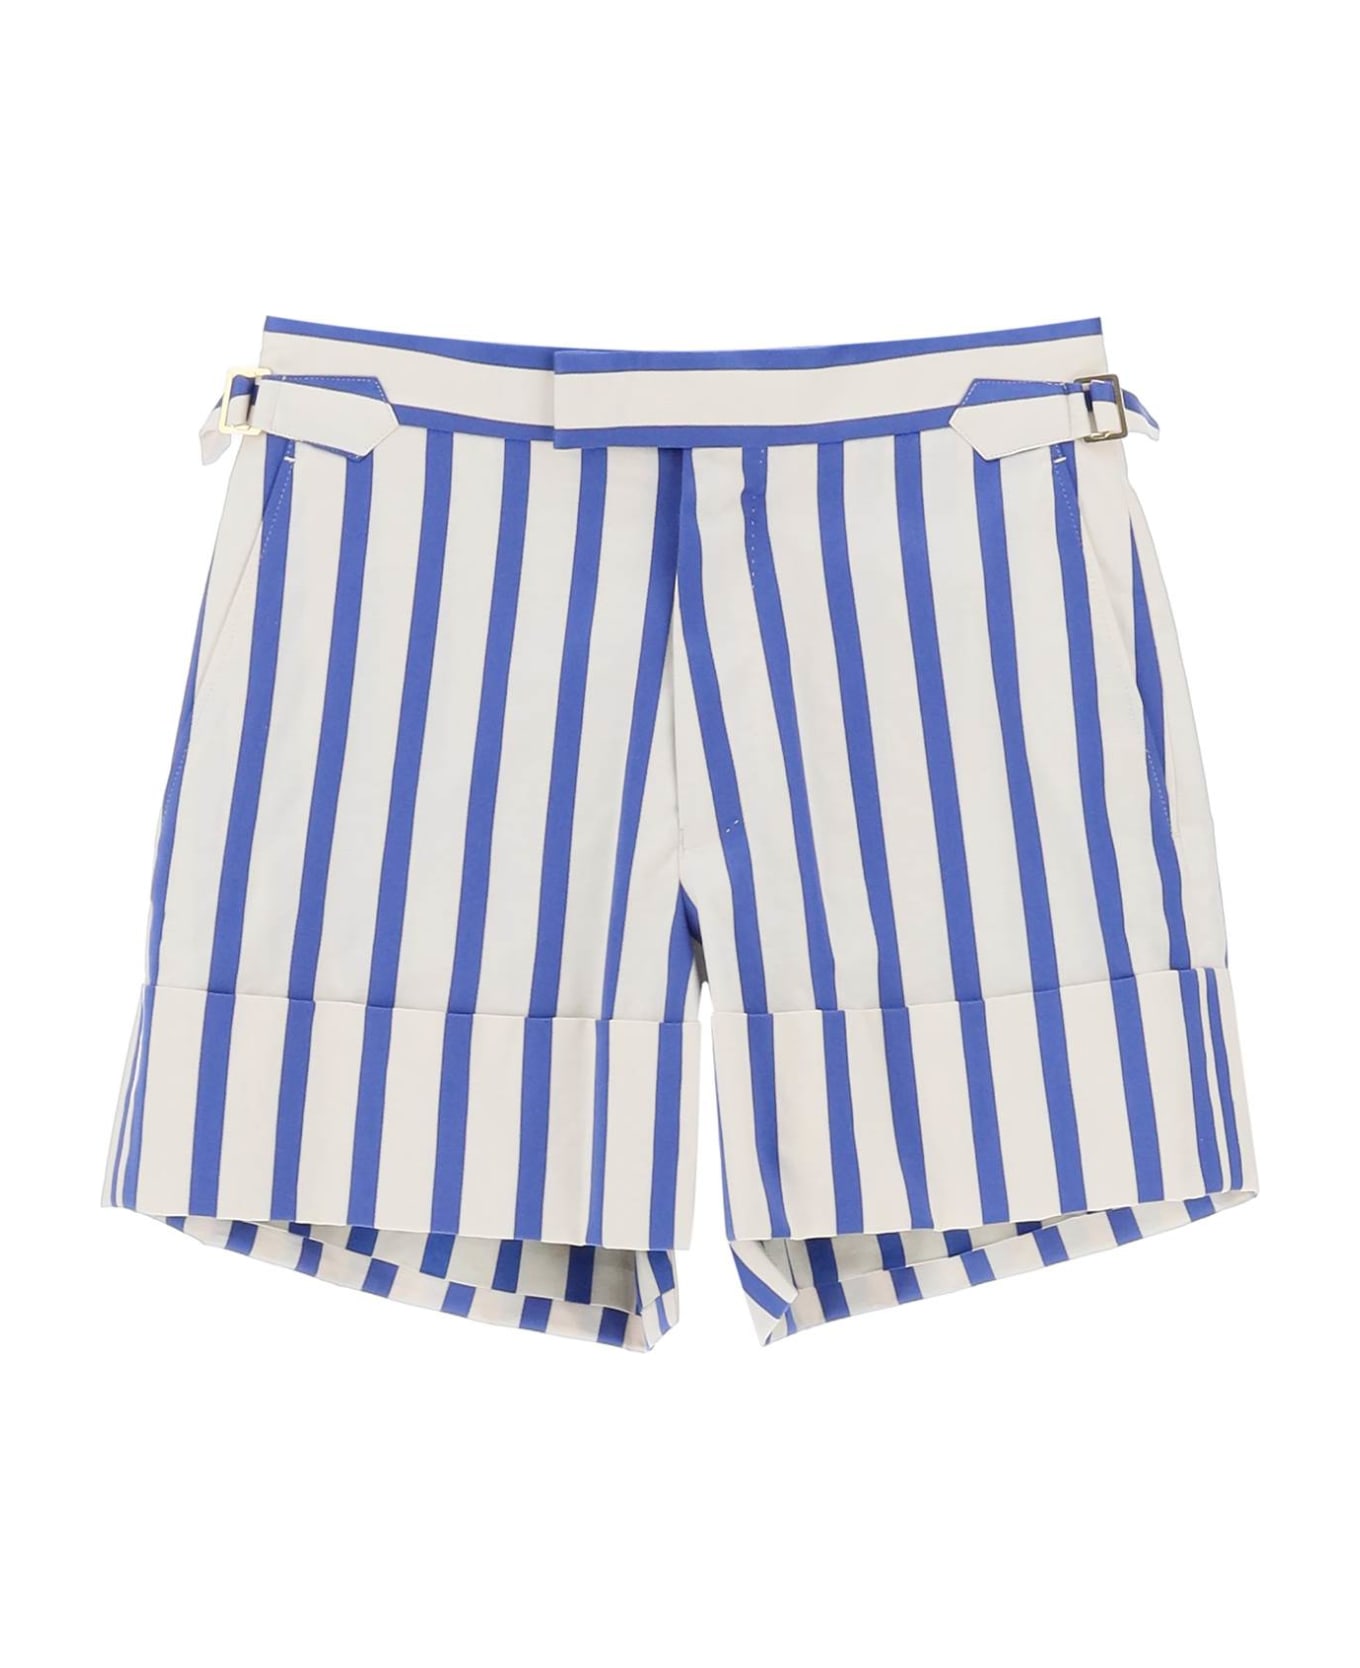 Vivienne Westwood 'bertram' Striped Shorts - BLUE WHITE (White)